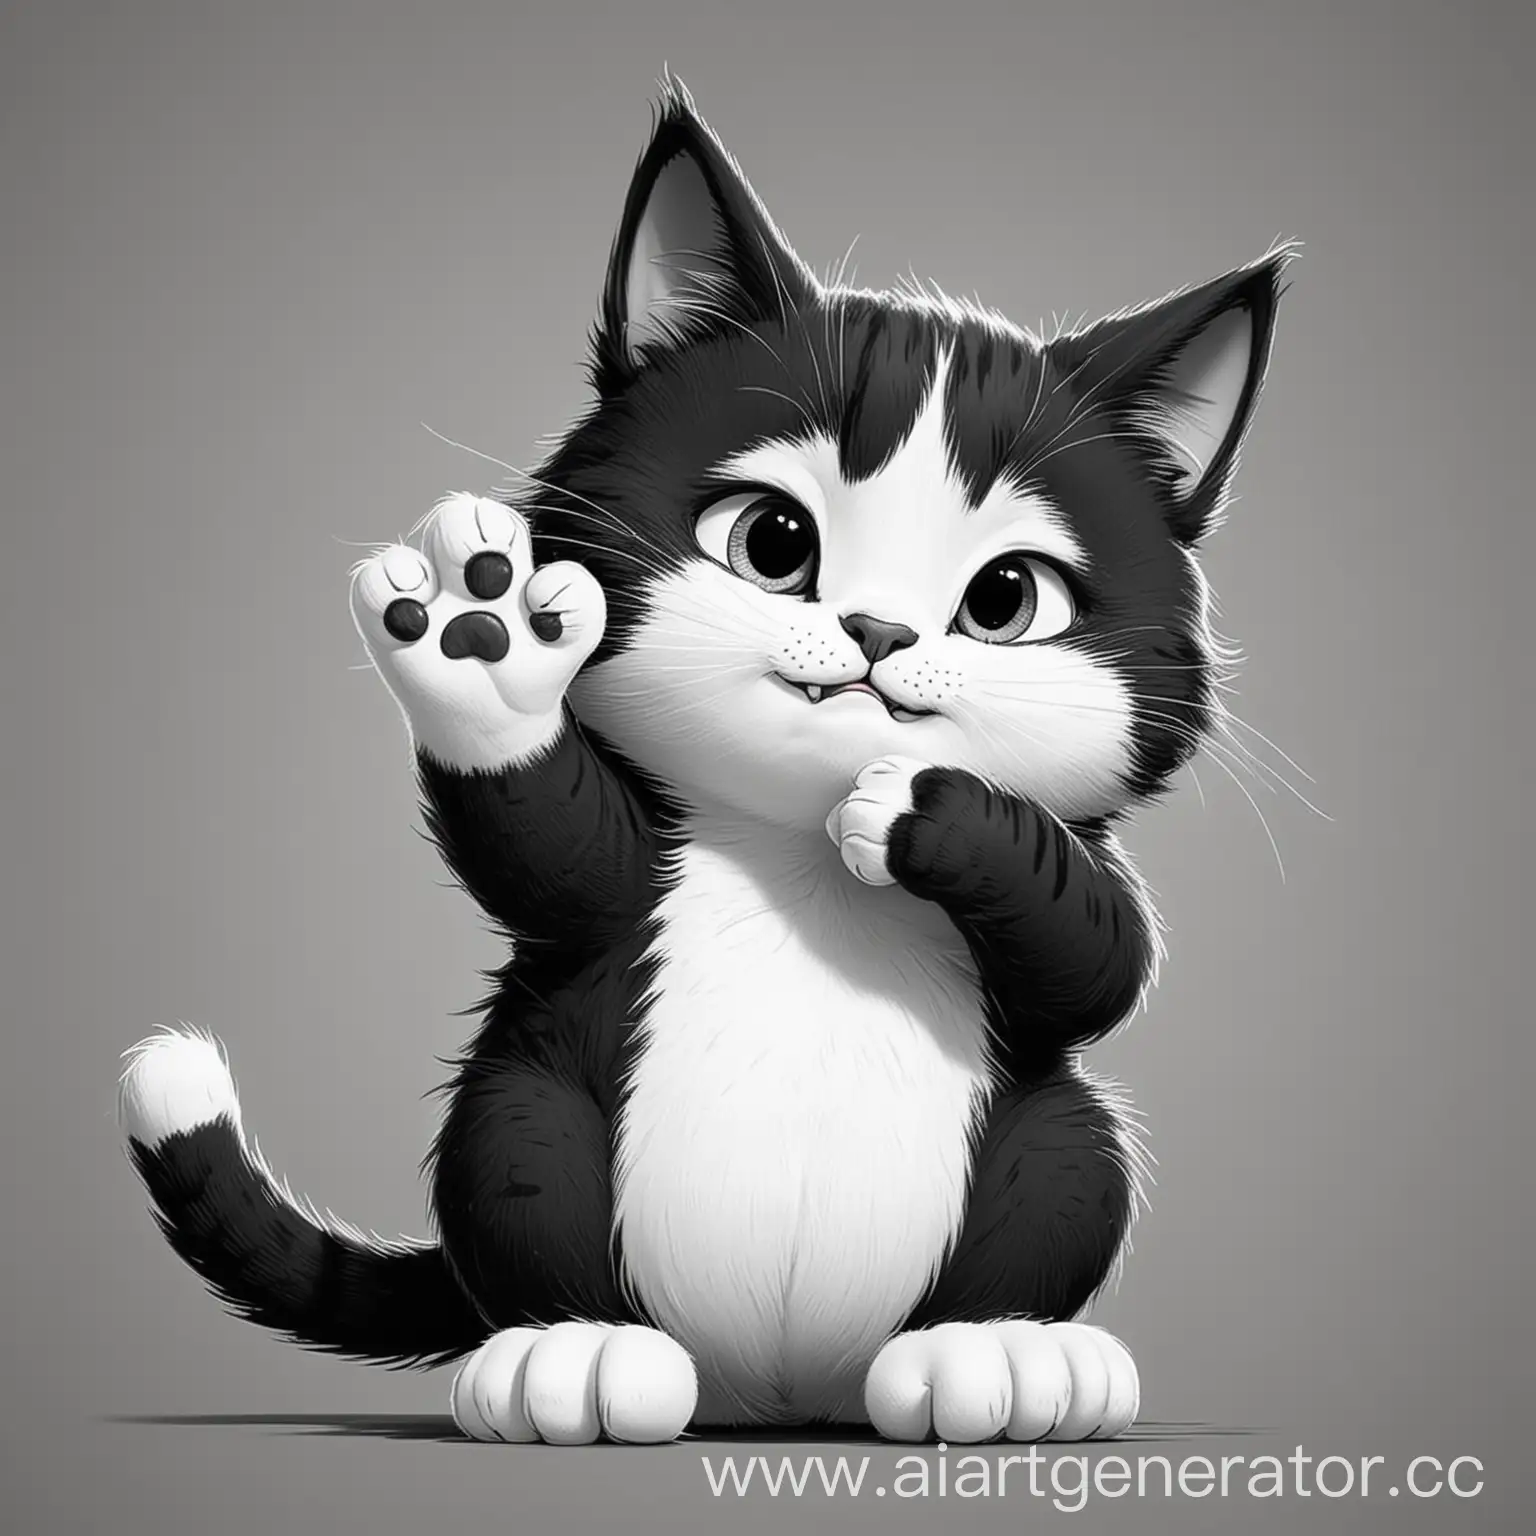 Cartoon-Black-and-White-Cat-Licking-Paw-Resembling-Simons-Cat